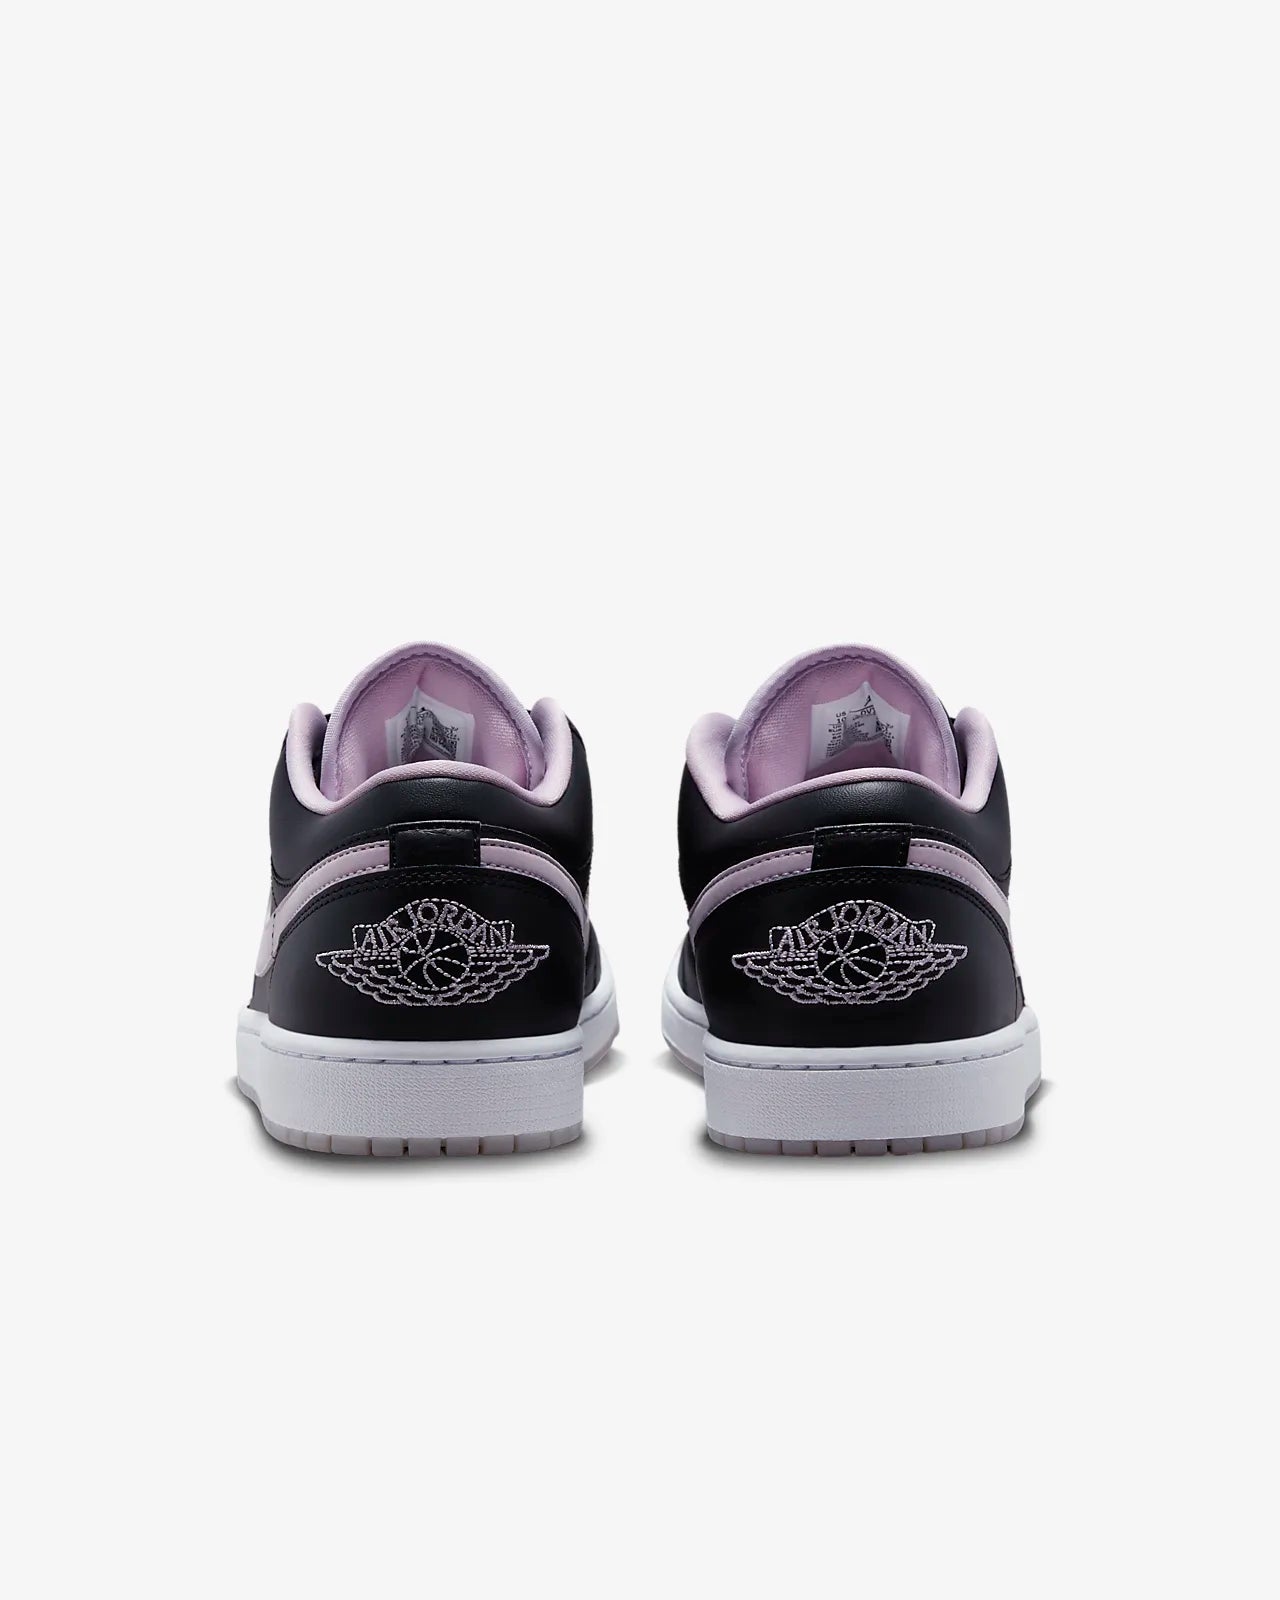 Nike - Air Jordan 1 Low SE - Iced Lilac